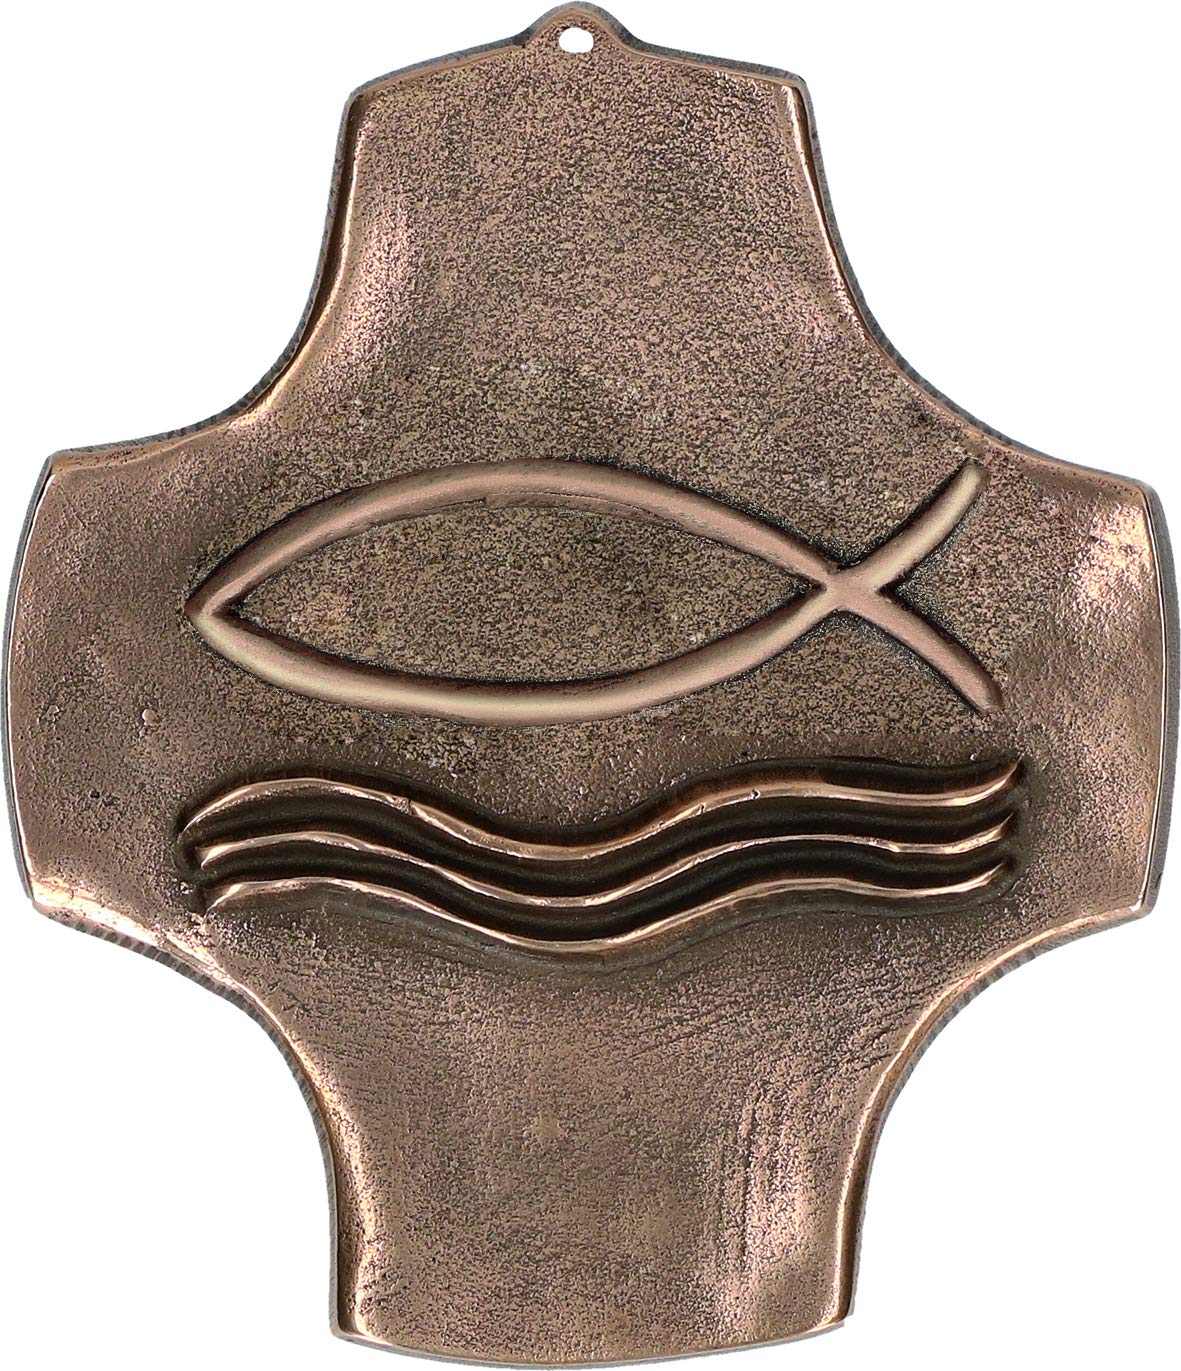 Butzon & Bercker Taufkreuz Fisch Ichthys 11 cm Bronze Wandkreuz 11 cm Kruzifix Kreuz